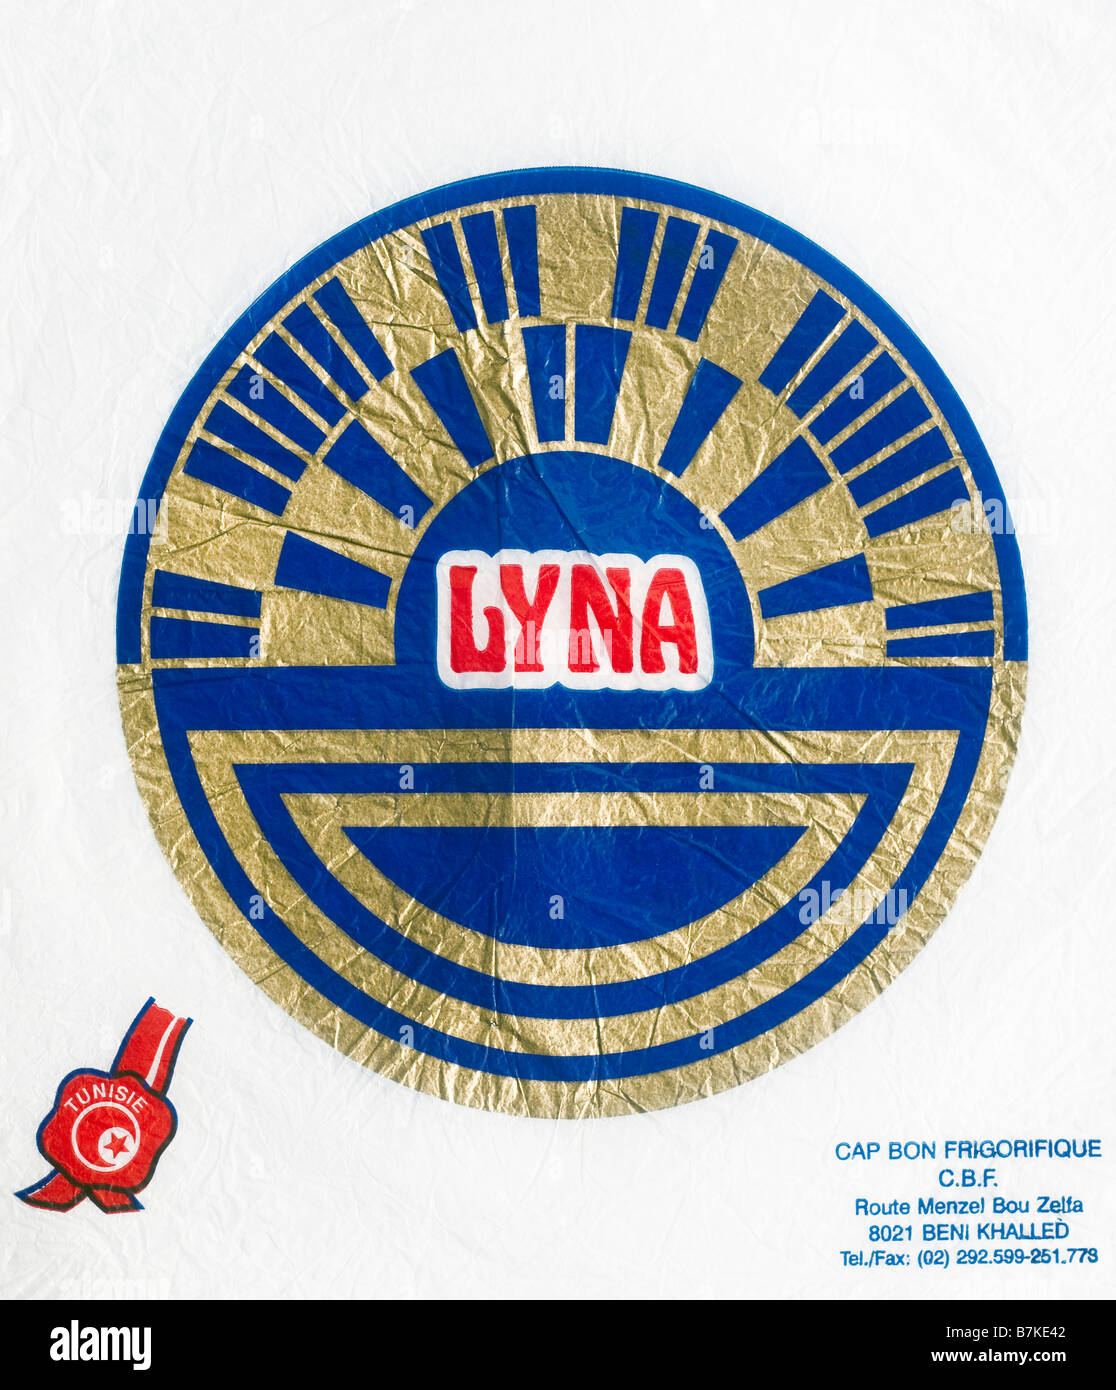 Printed ephemera / Citrus fruit wrapper from Tunisia - Lyna / Blue Gold Disk illustration on tissue paper. Stock Photo